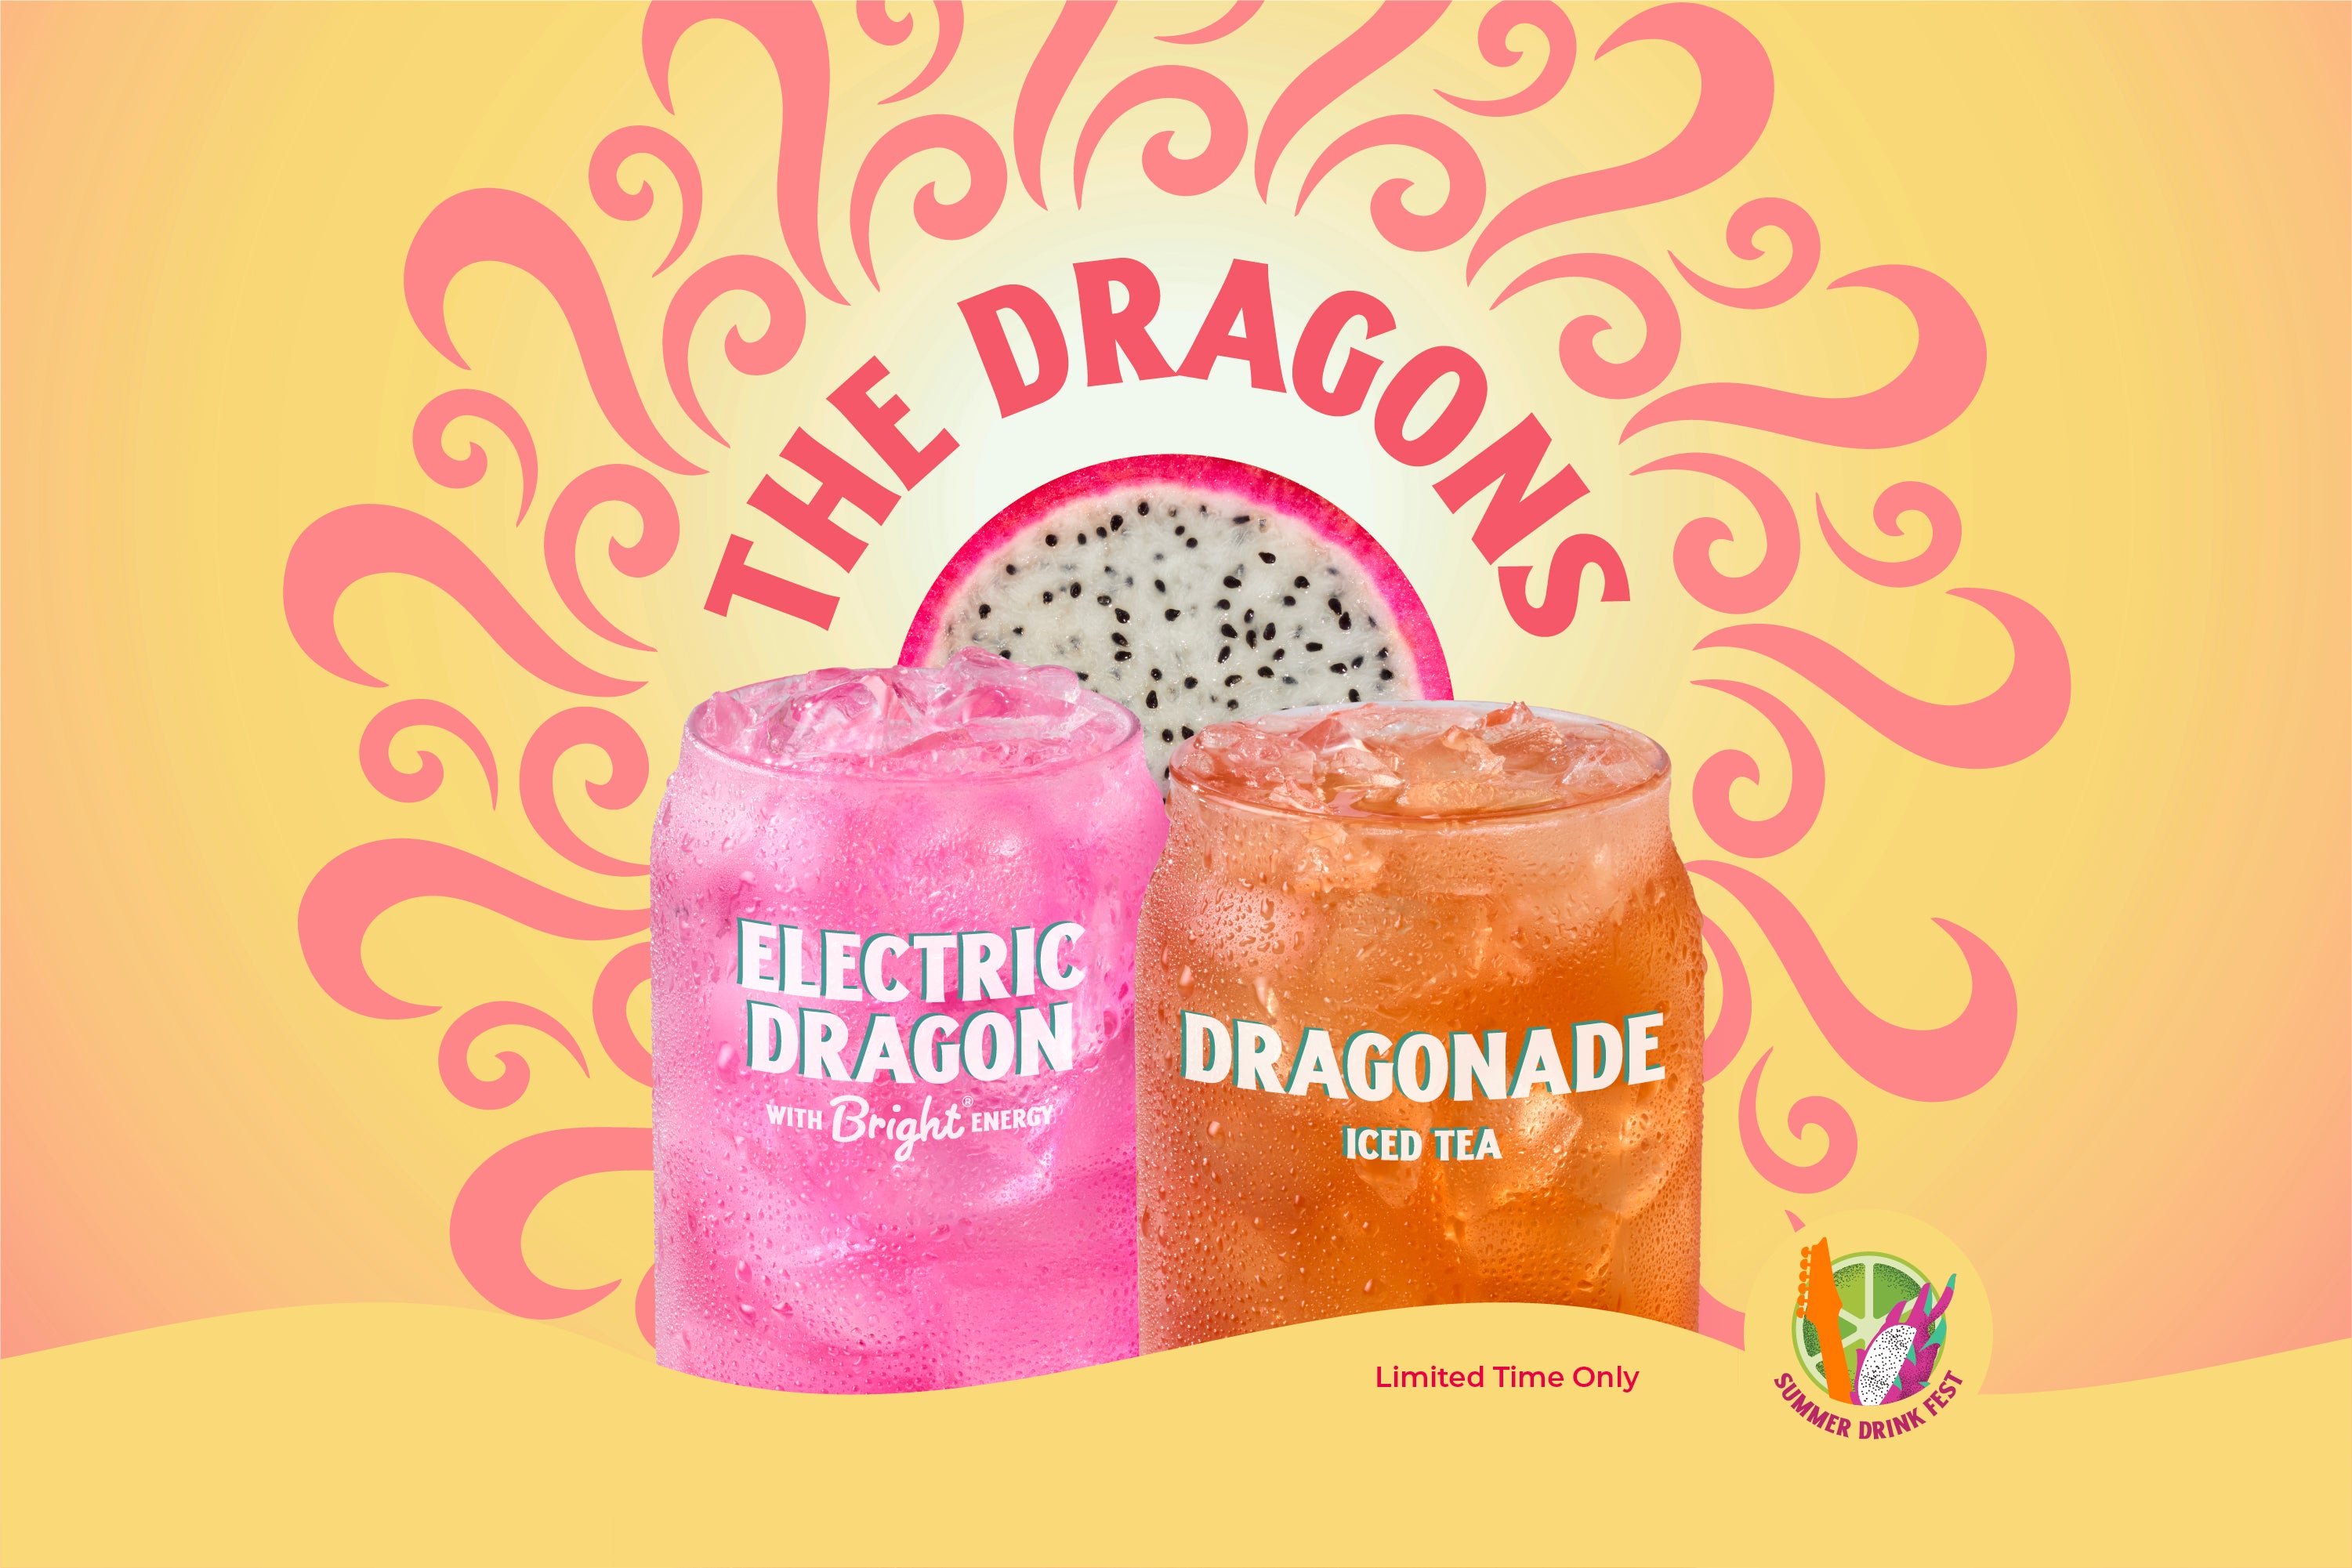 Summer Drink Fest: Electric Dragon Energy Drink and Dragonade Iced Tea